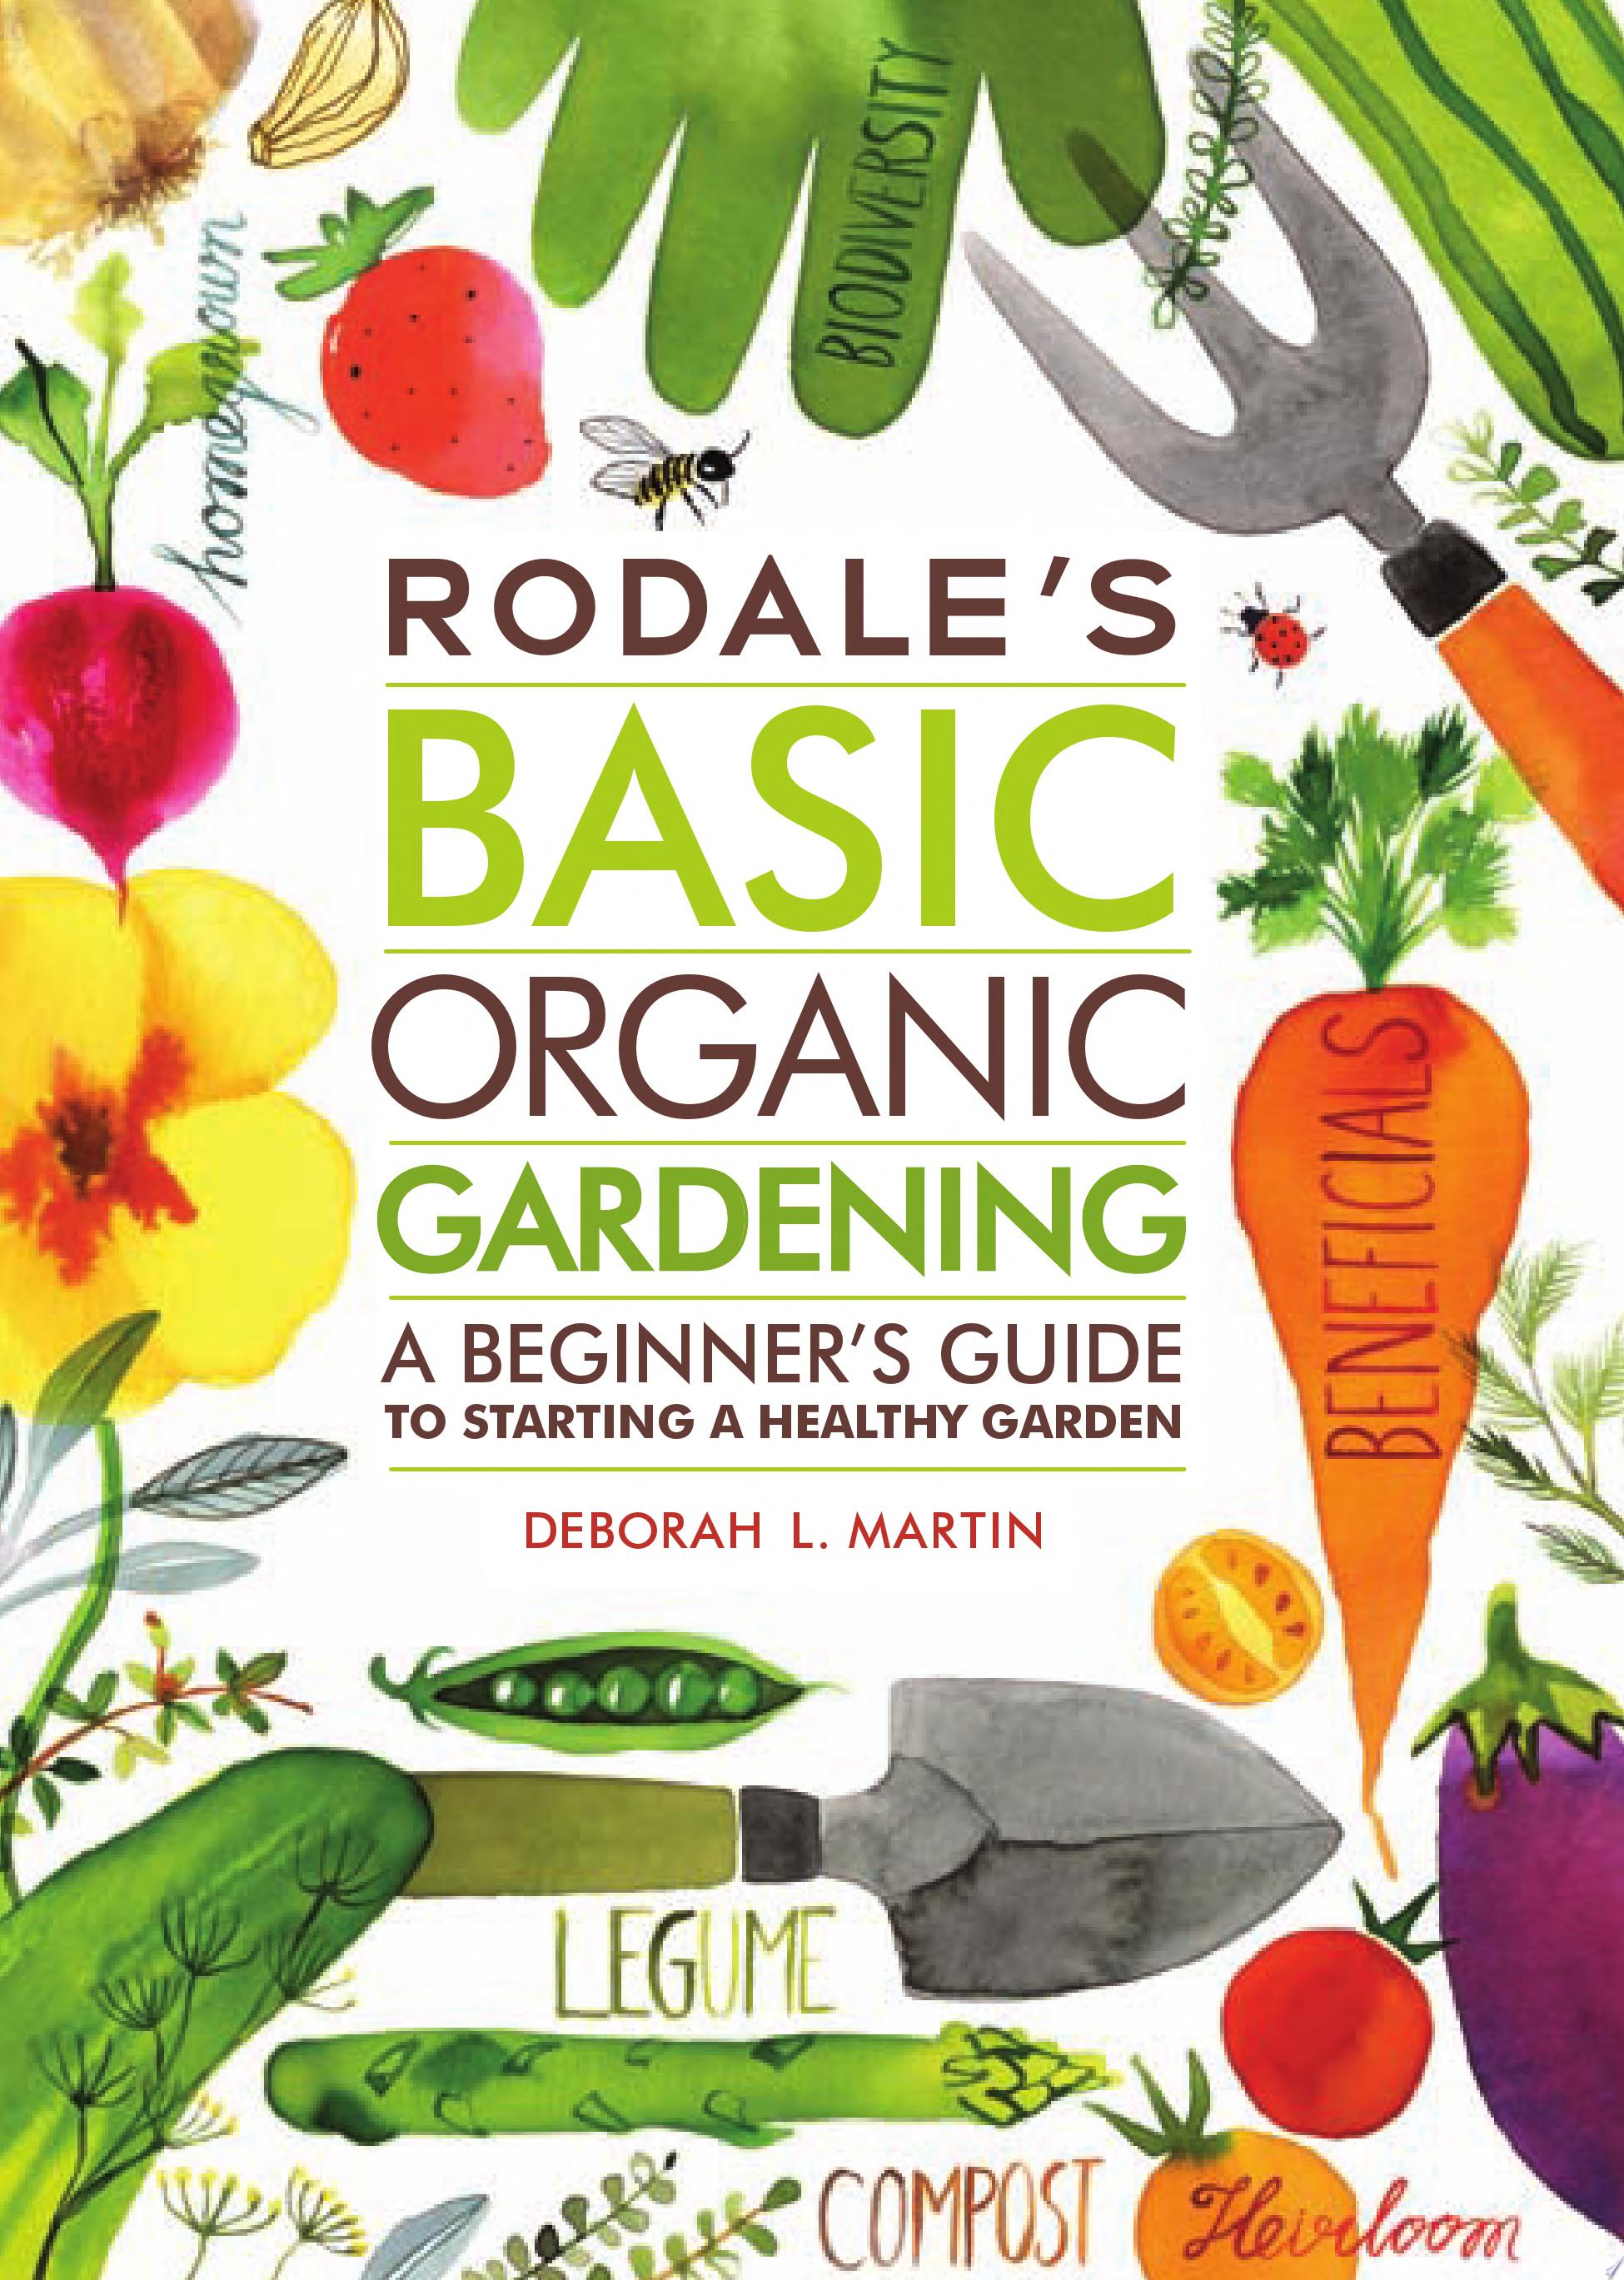 Image for "Rodale&#039;s Basic Organic Gardening"